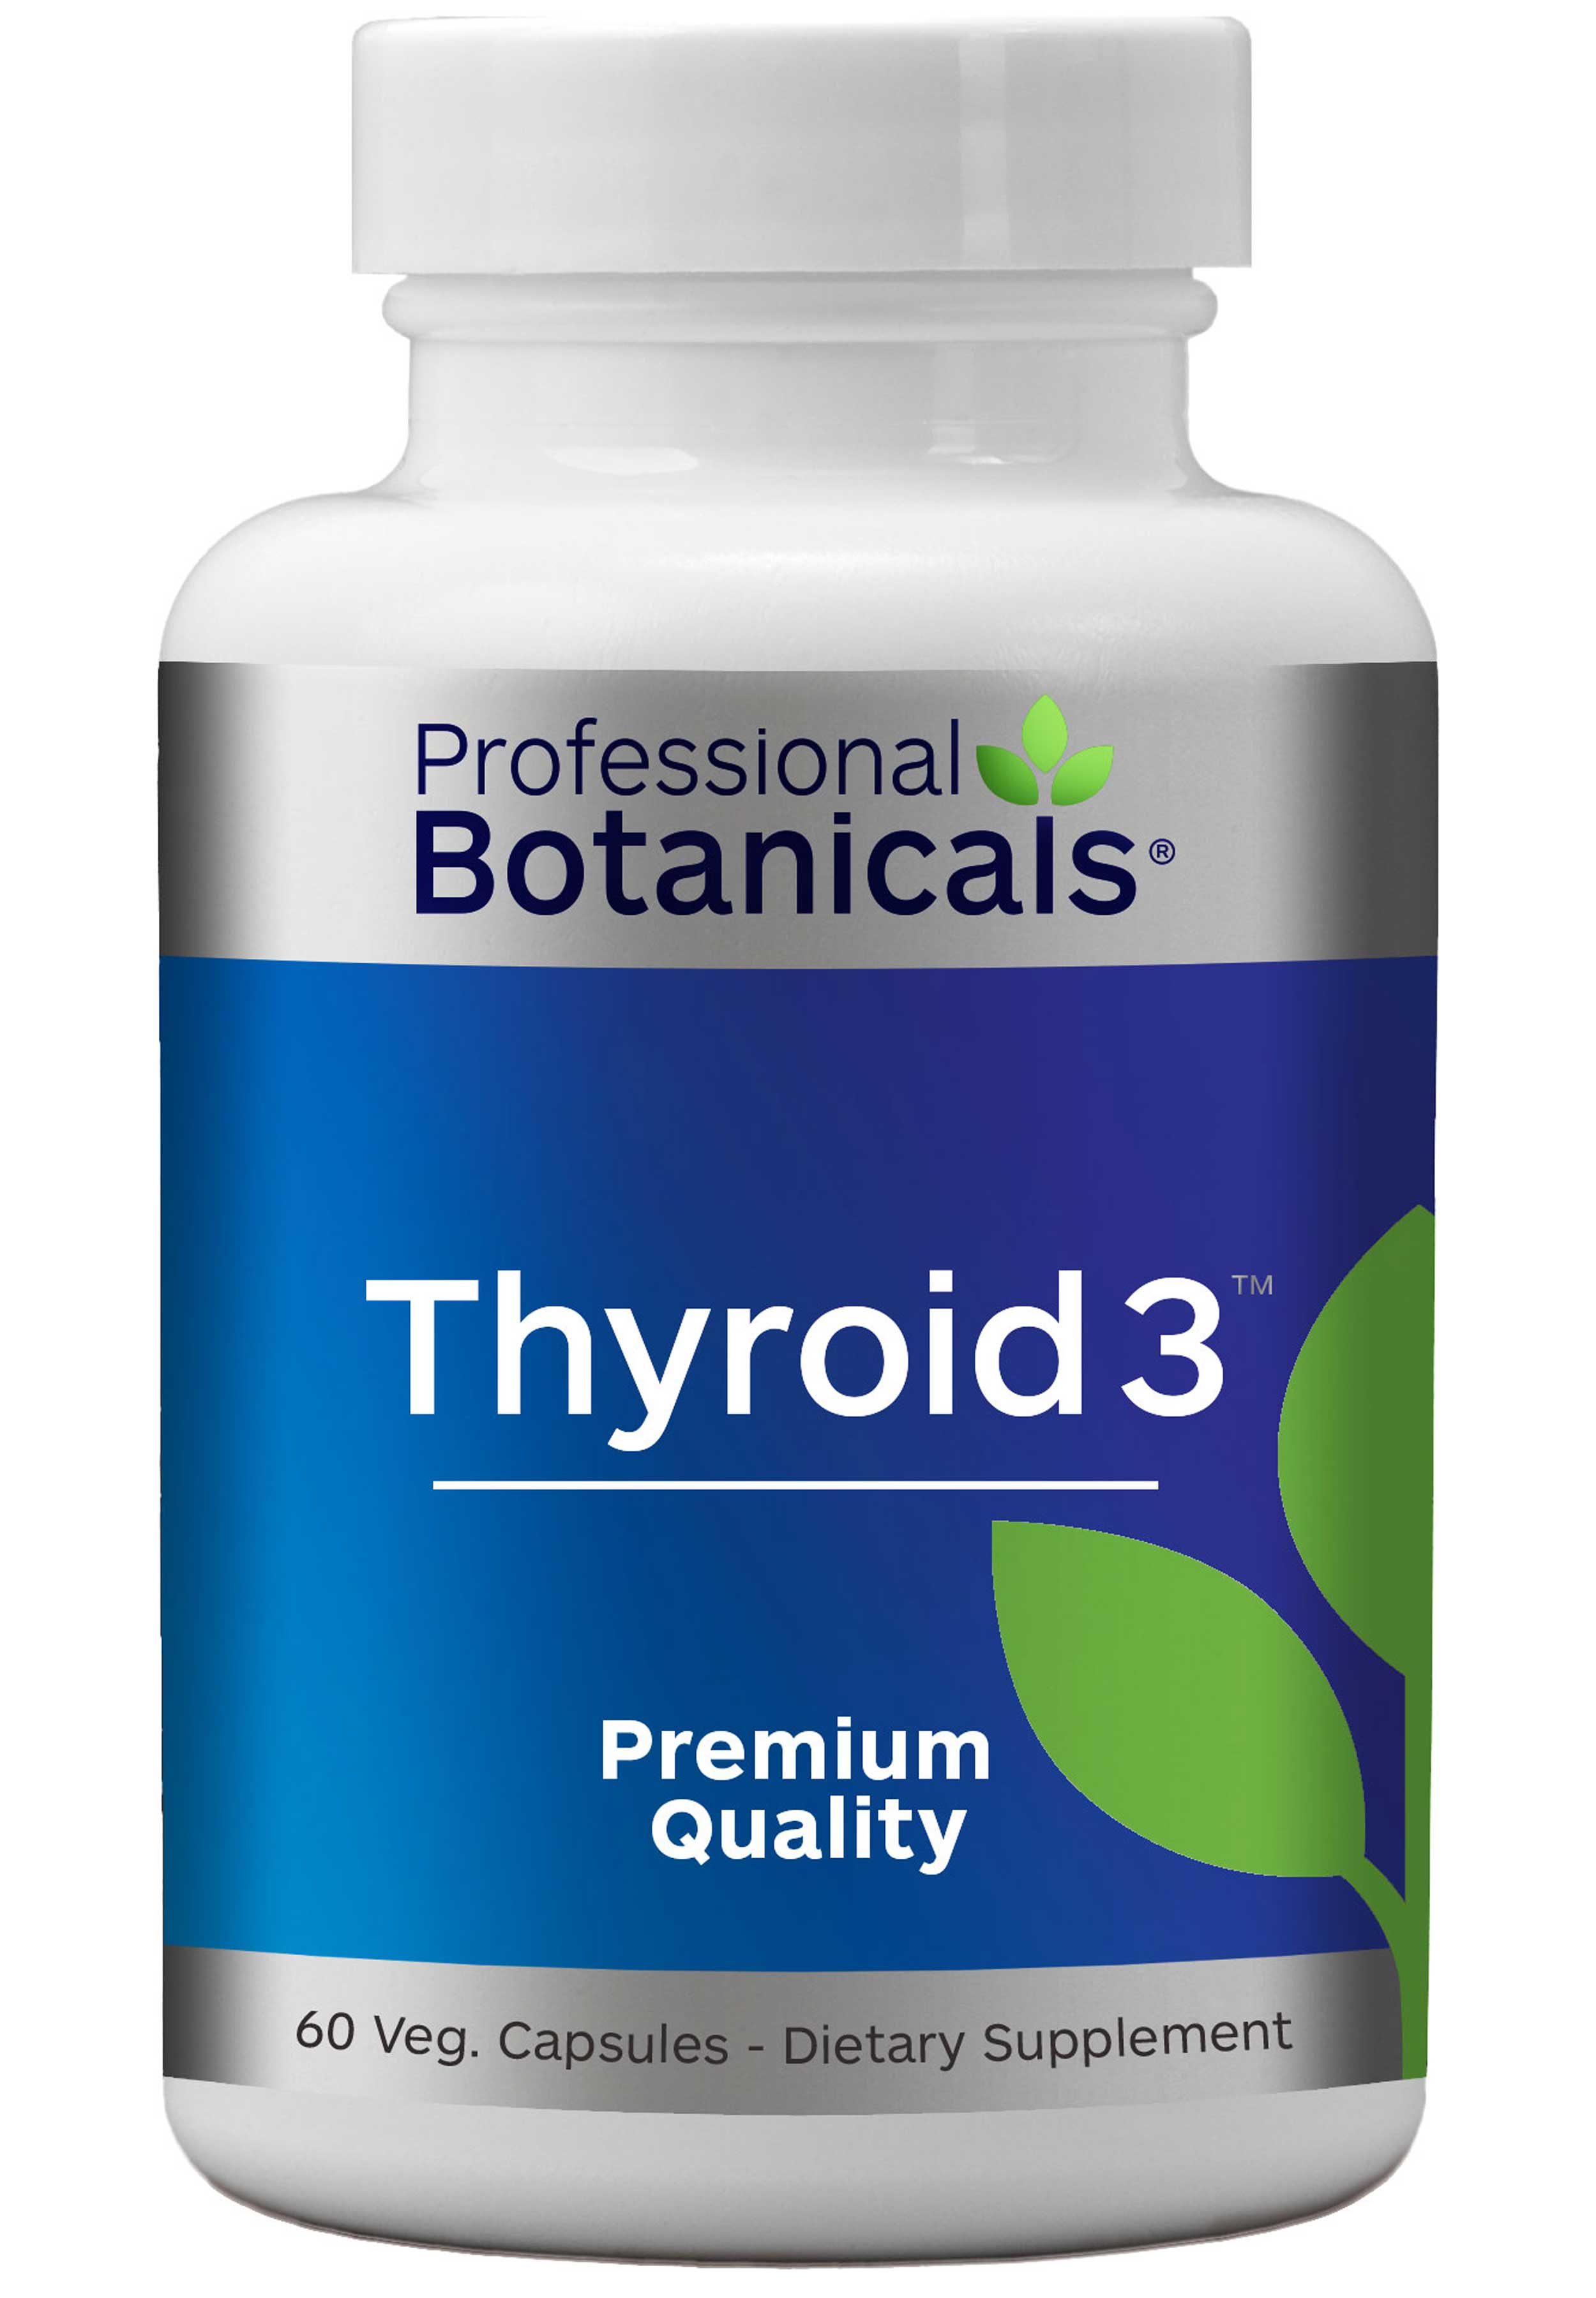 Professional Botanicals Thyroid 3 